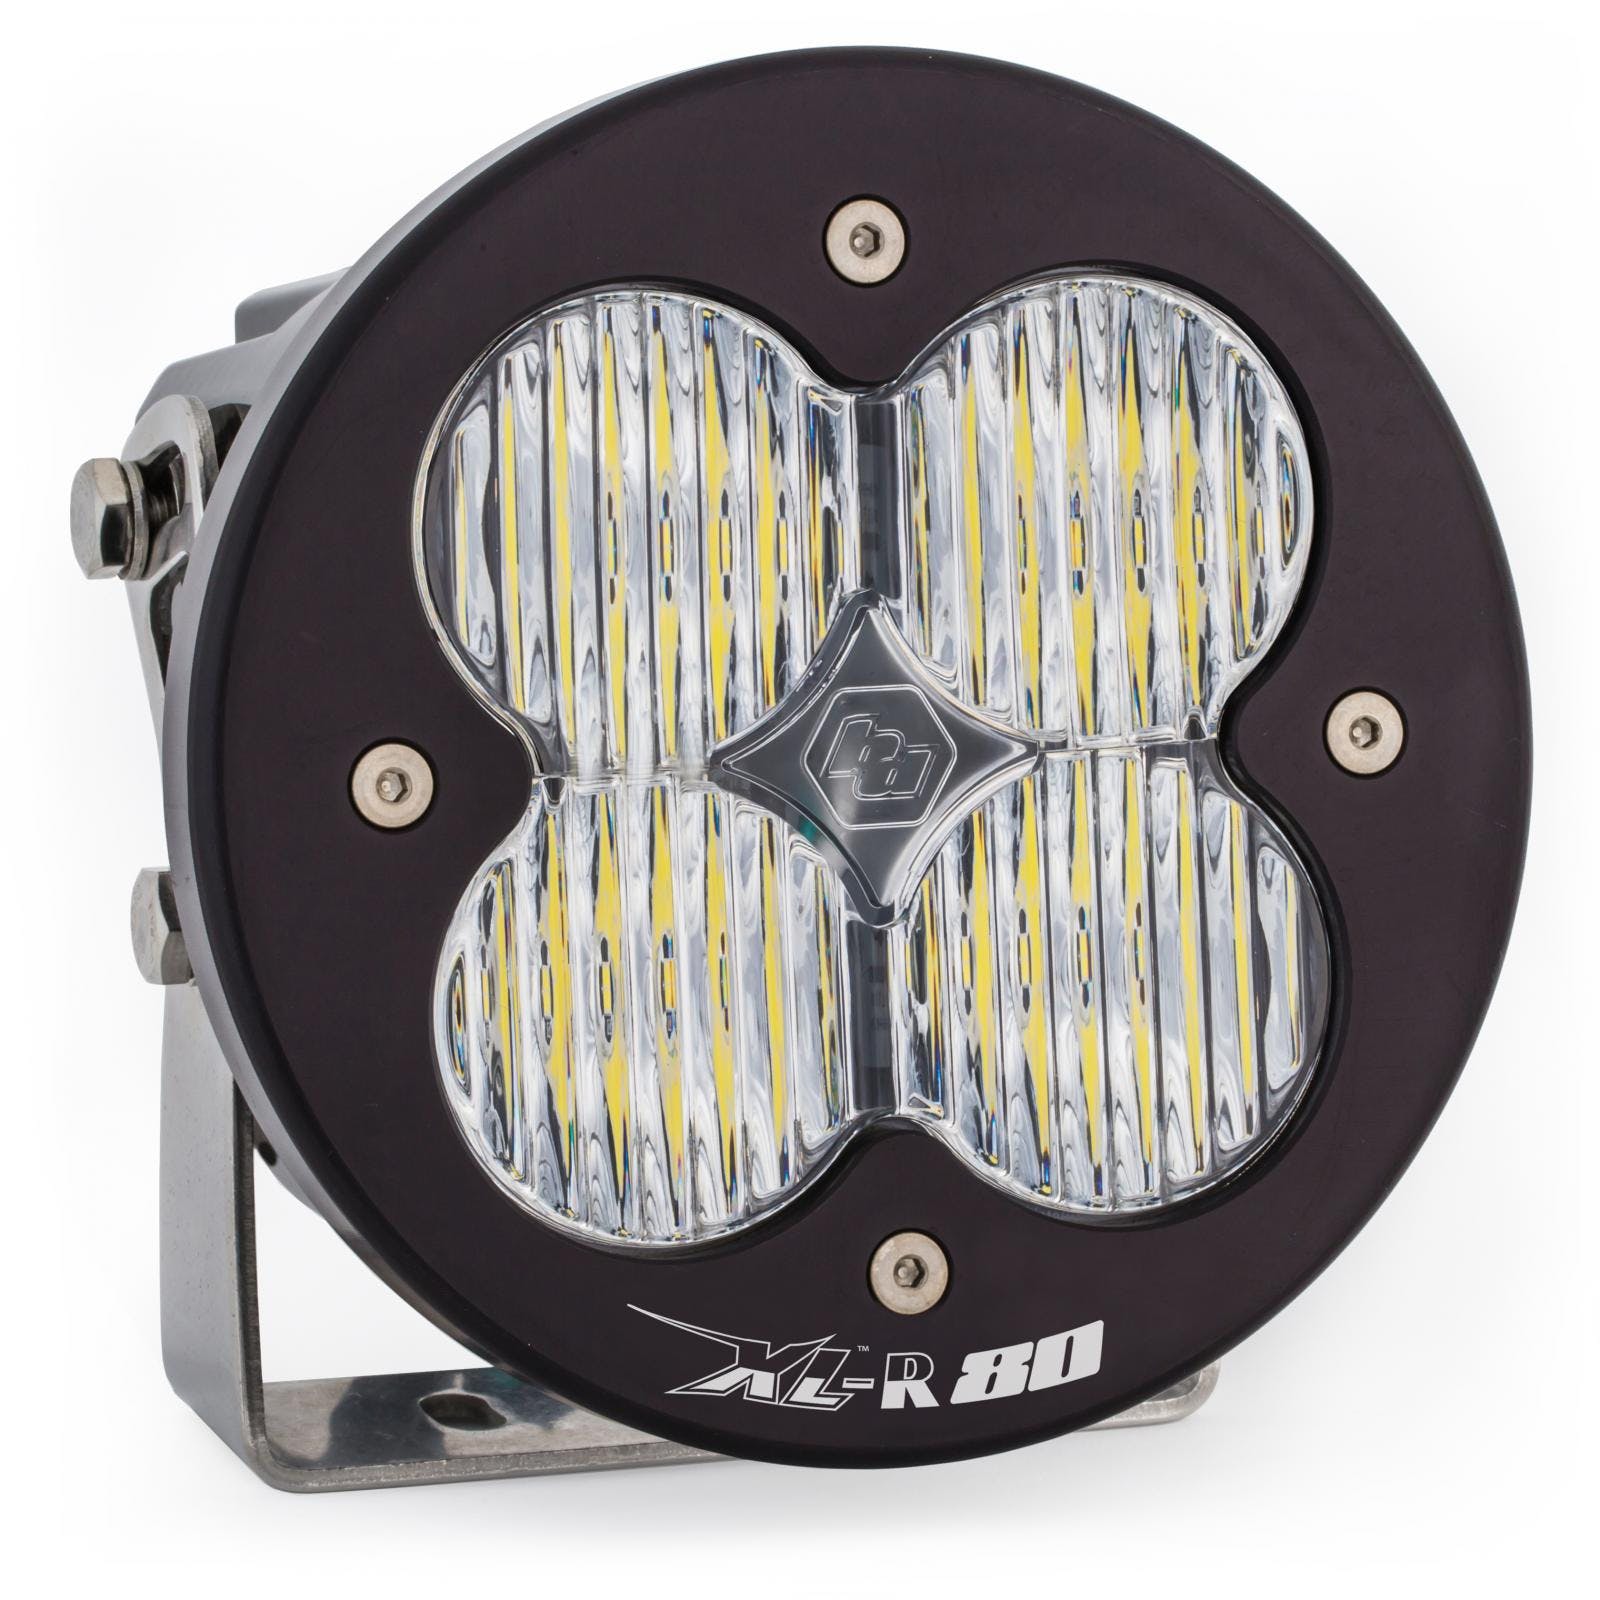 Baja Designs 760005 LED Light Pods Clear Lens Spot Each XL R 80 Wide Cornering